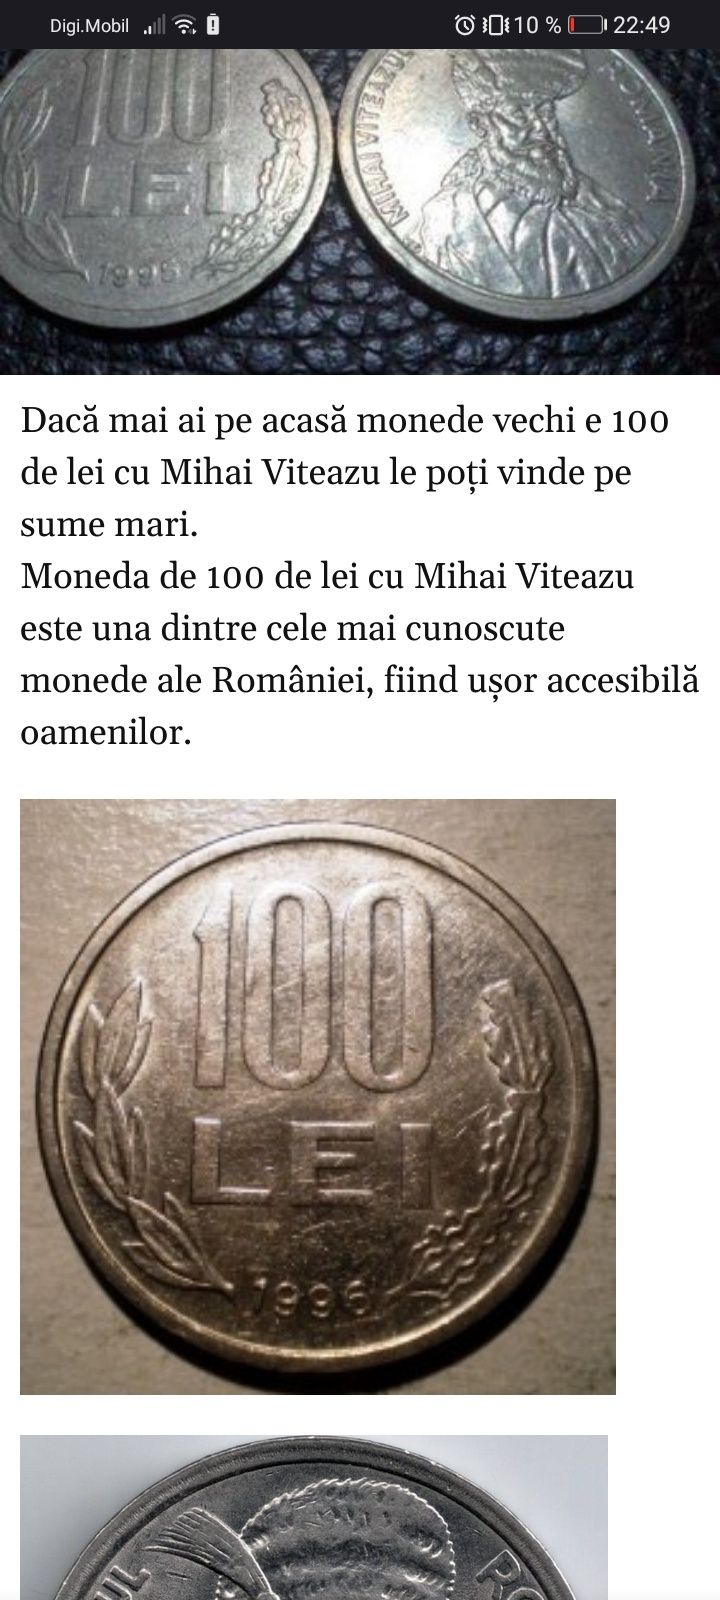 Moneda 100 lei foarte rara cu Mihai Viteazu